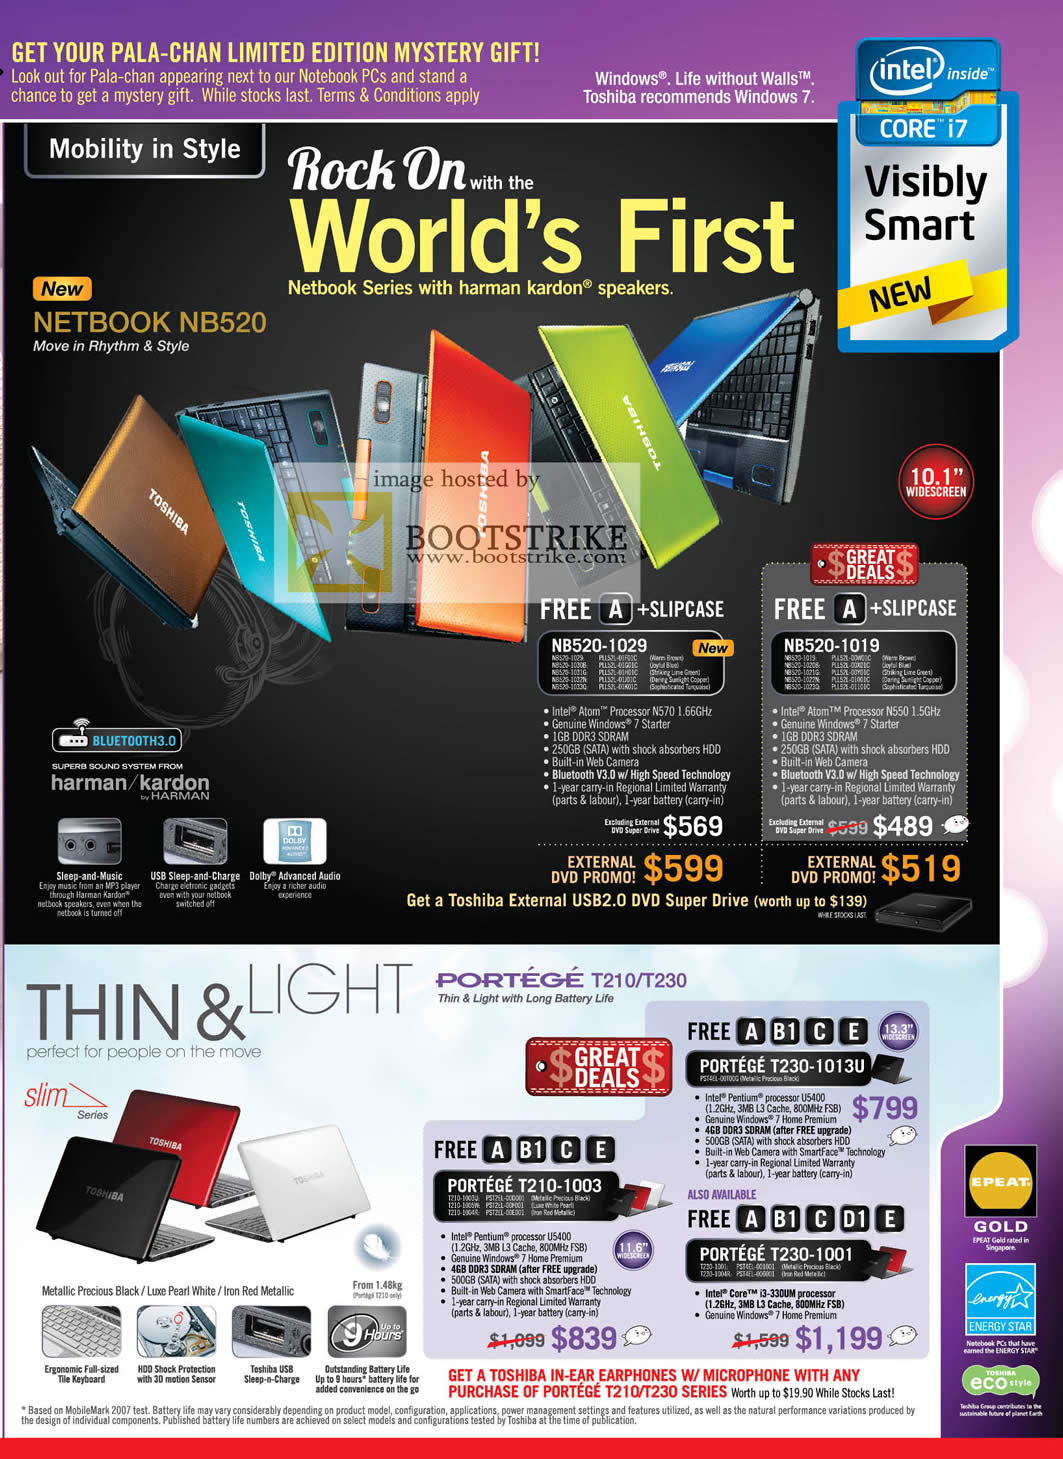 IT Show 2011 price list image brochure of Toshiba Notebooks Netbook NB520 1029 1019 Portege T210 1003 T230 1013U 1001